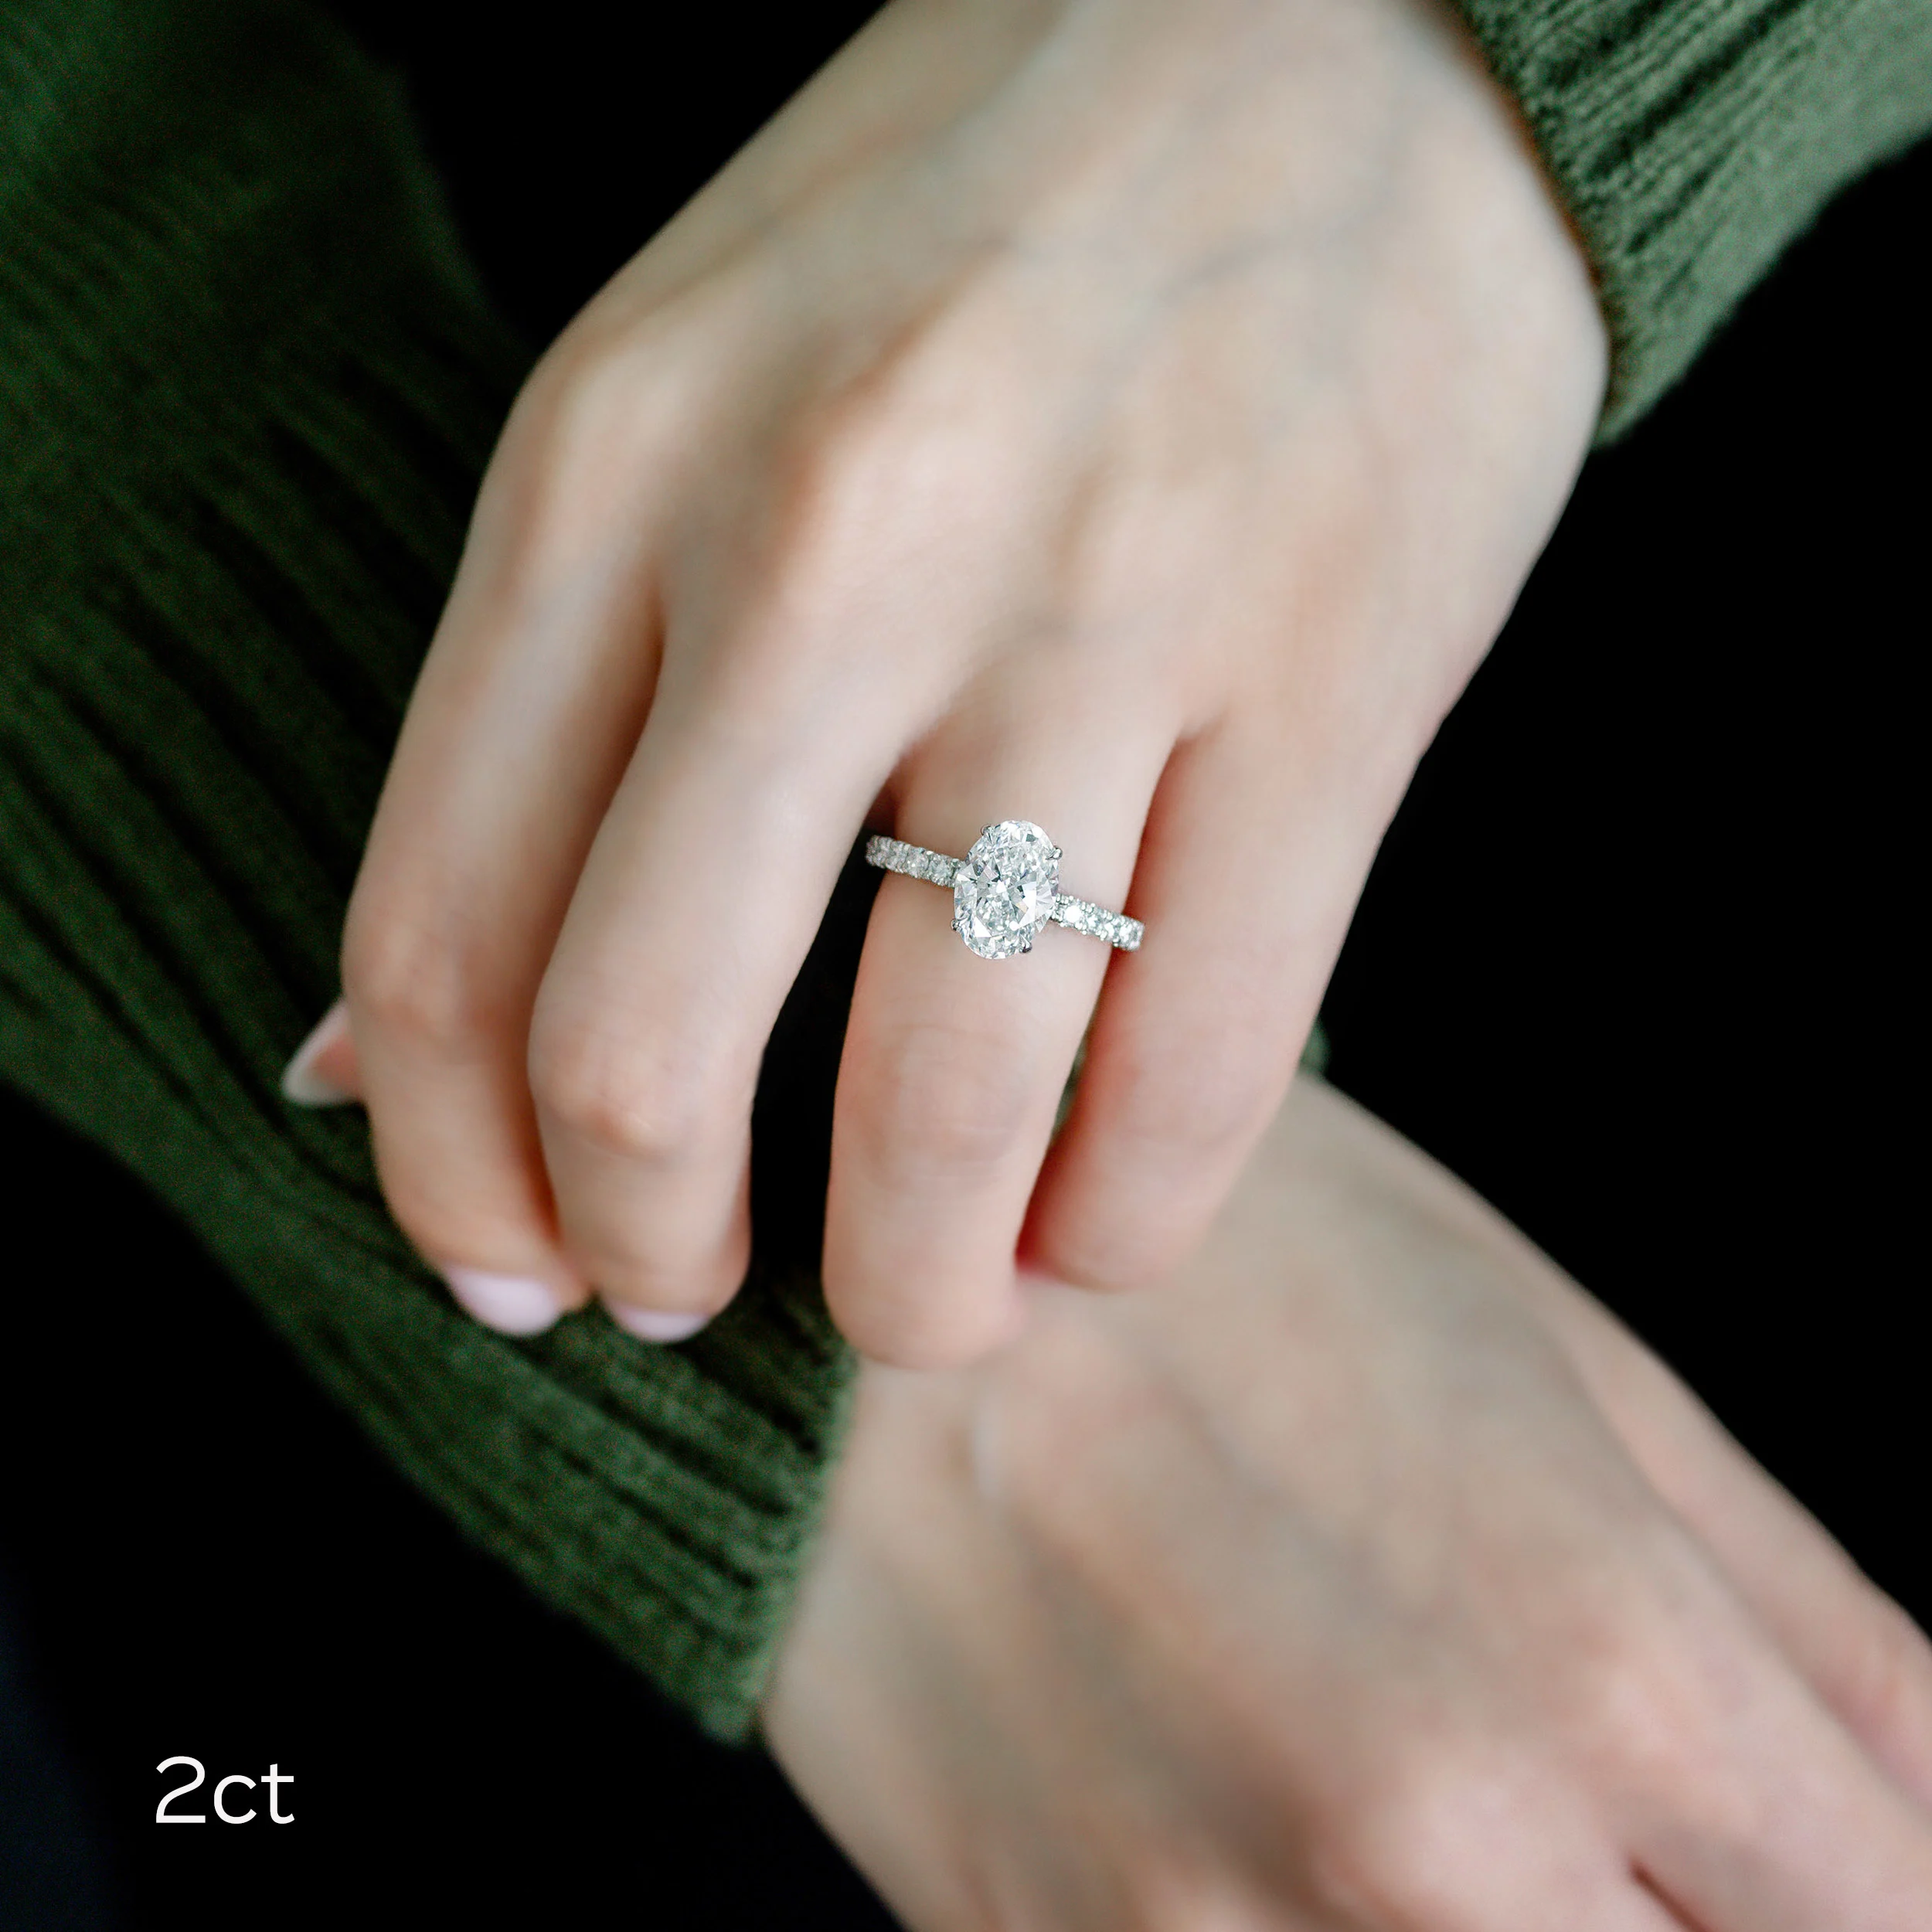 2.0 ct Lab Diamonds Oval Petite Four Prong Pavé Diamond Engagement Ring in Platinum (Main View)